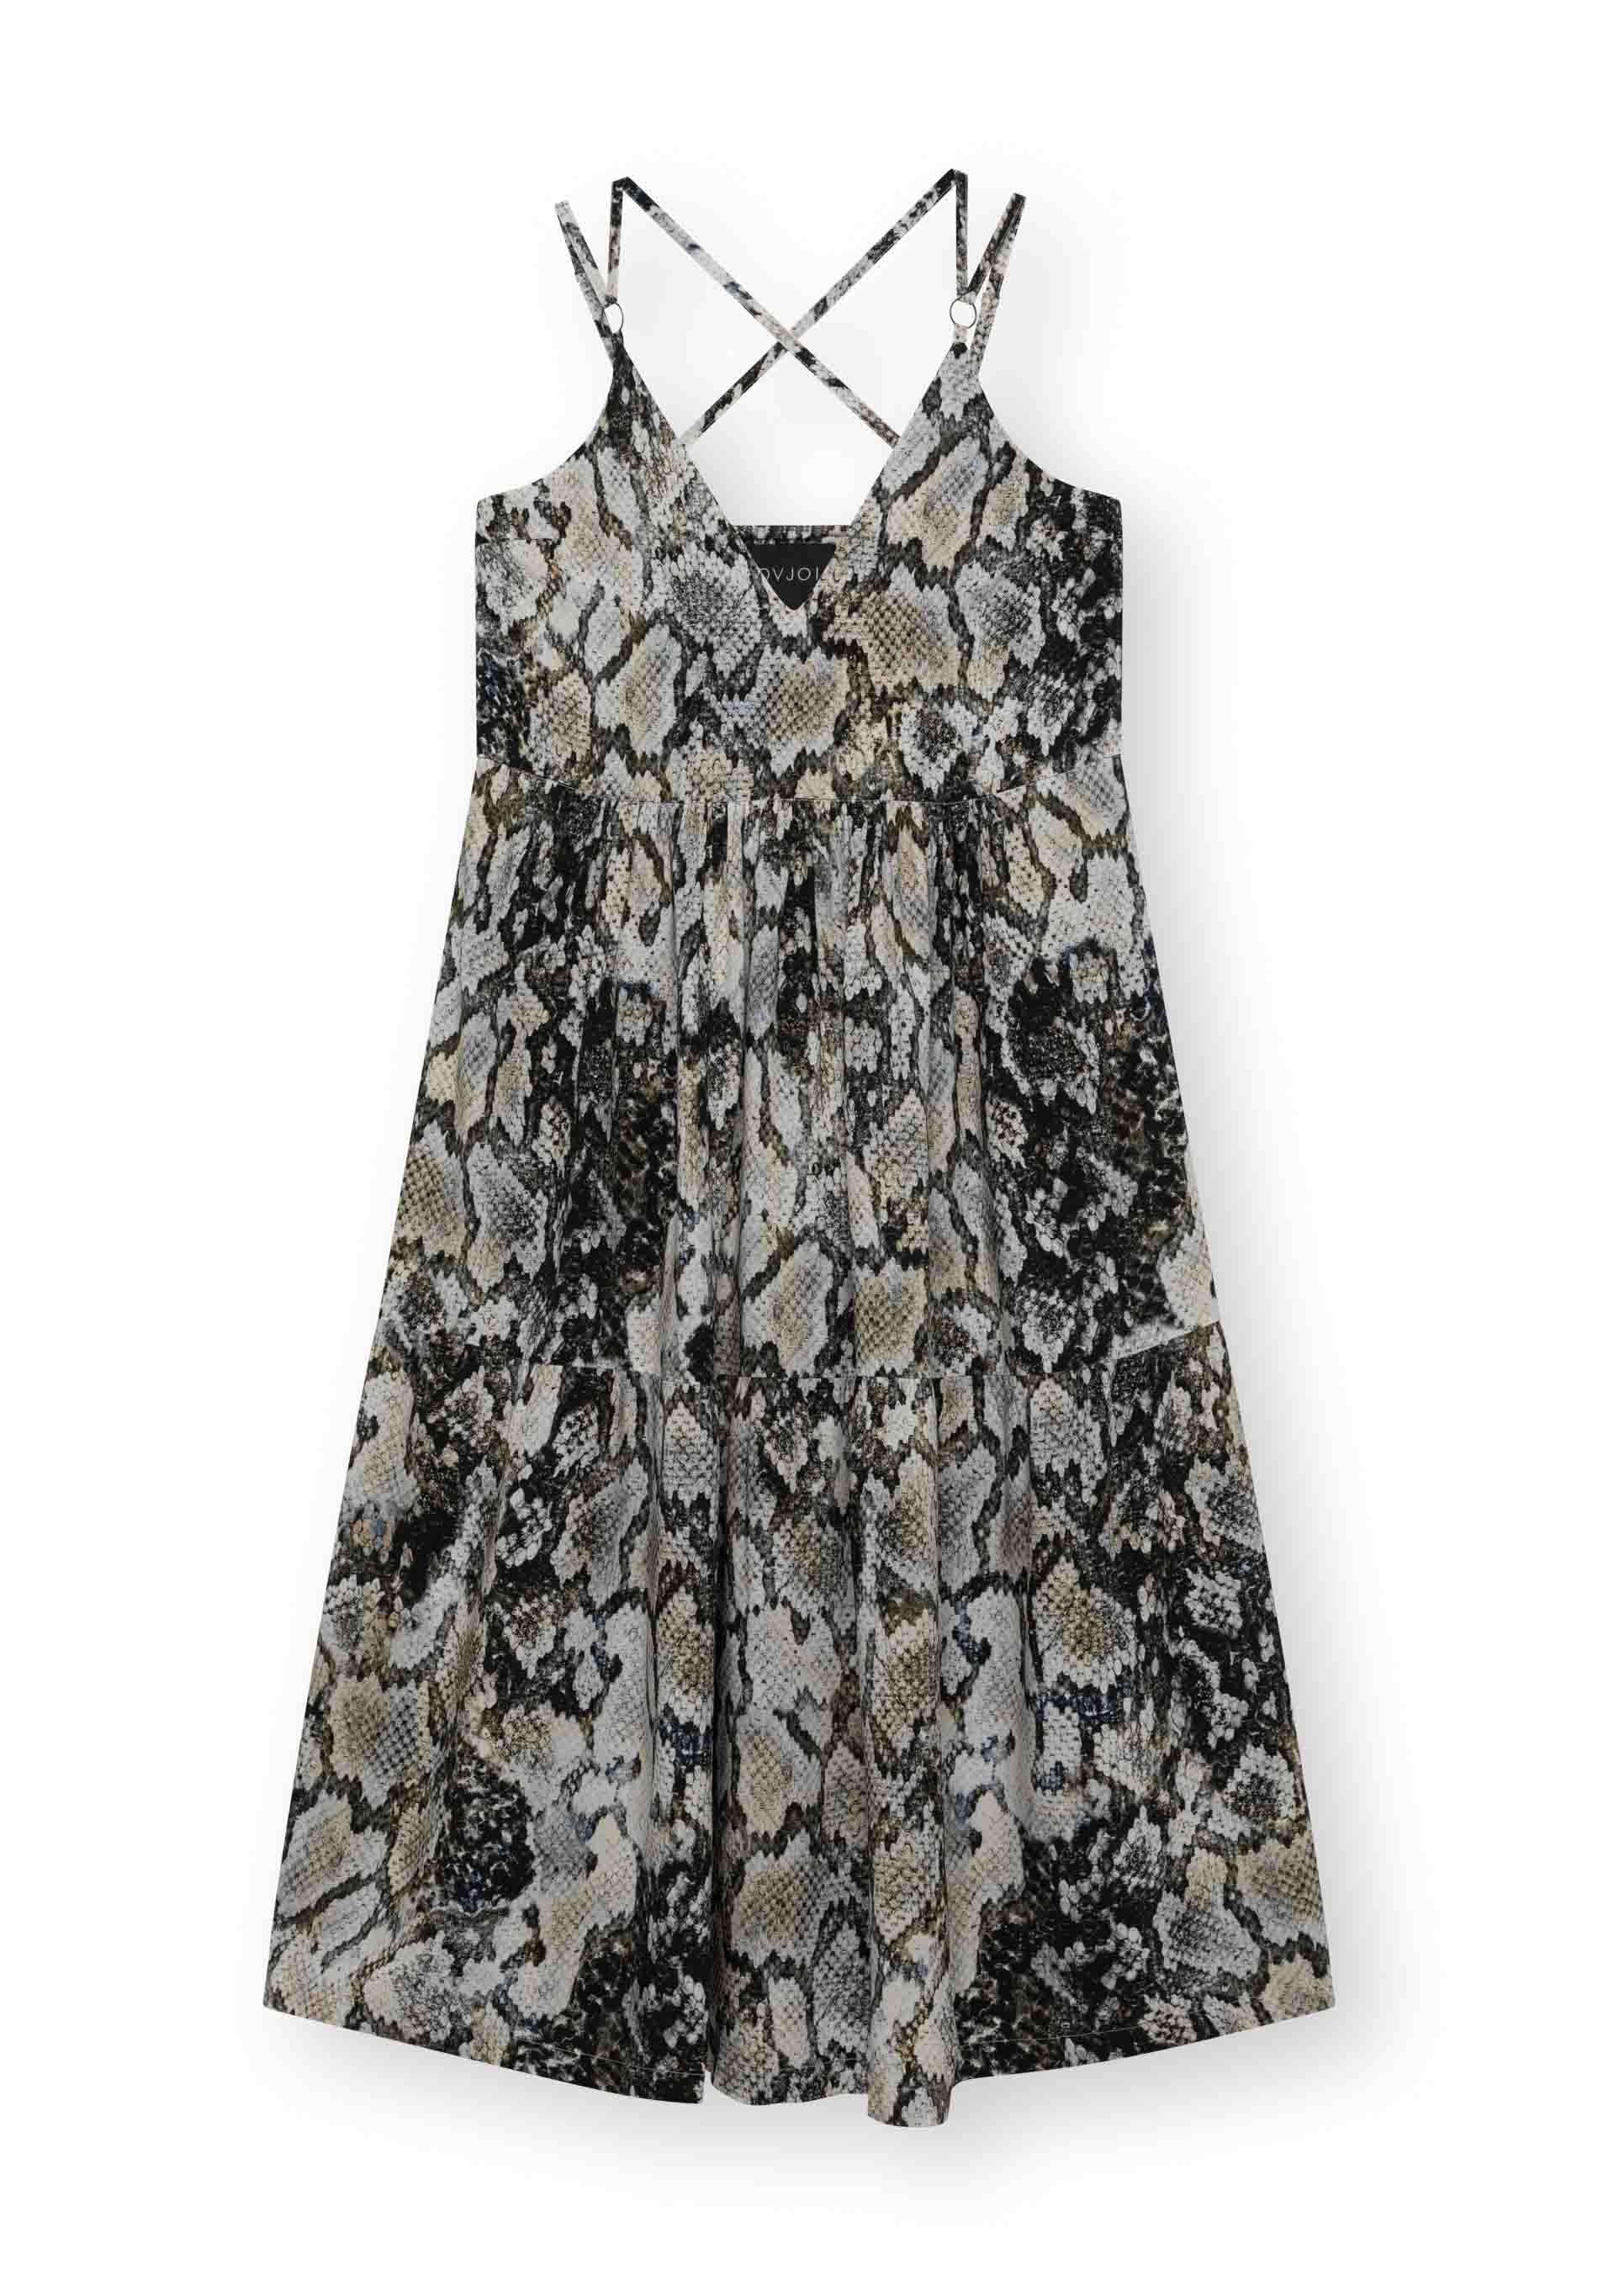 Dress SORAIDA in animal print by LOVJOI made from ECOVERO™ 